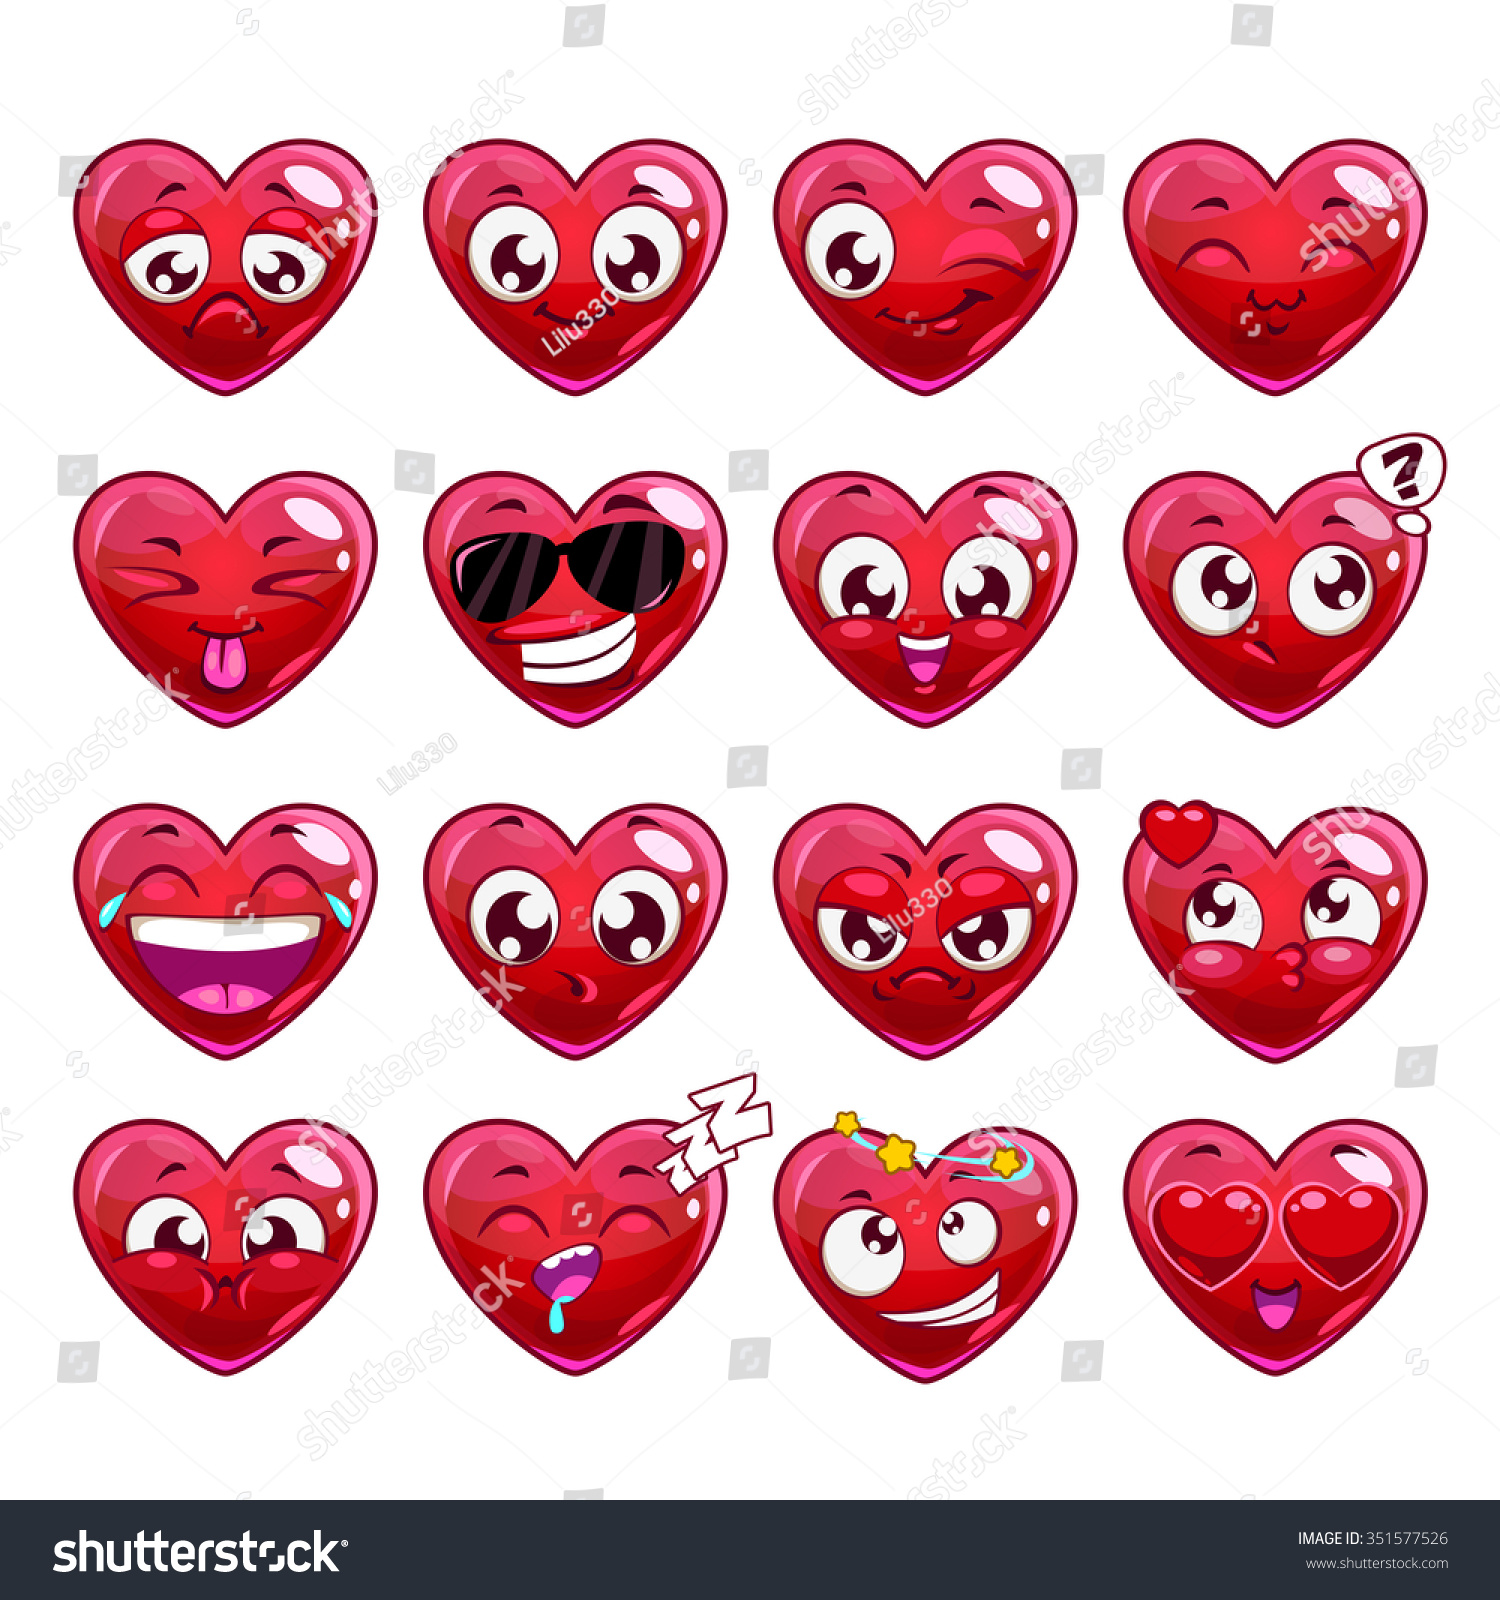 Funny Cartoon Heart Character Emotions Set Stock Vector 351577526 - Shutterstock